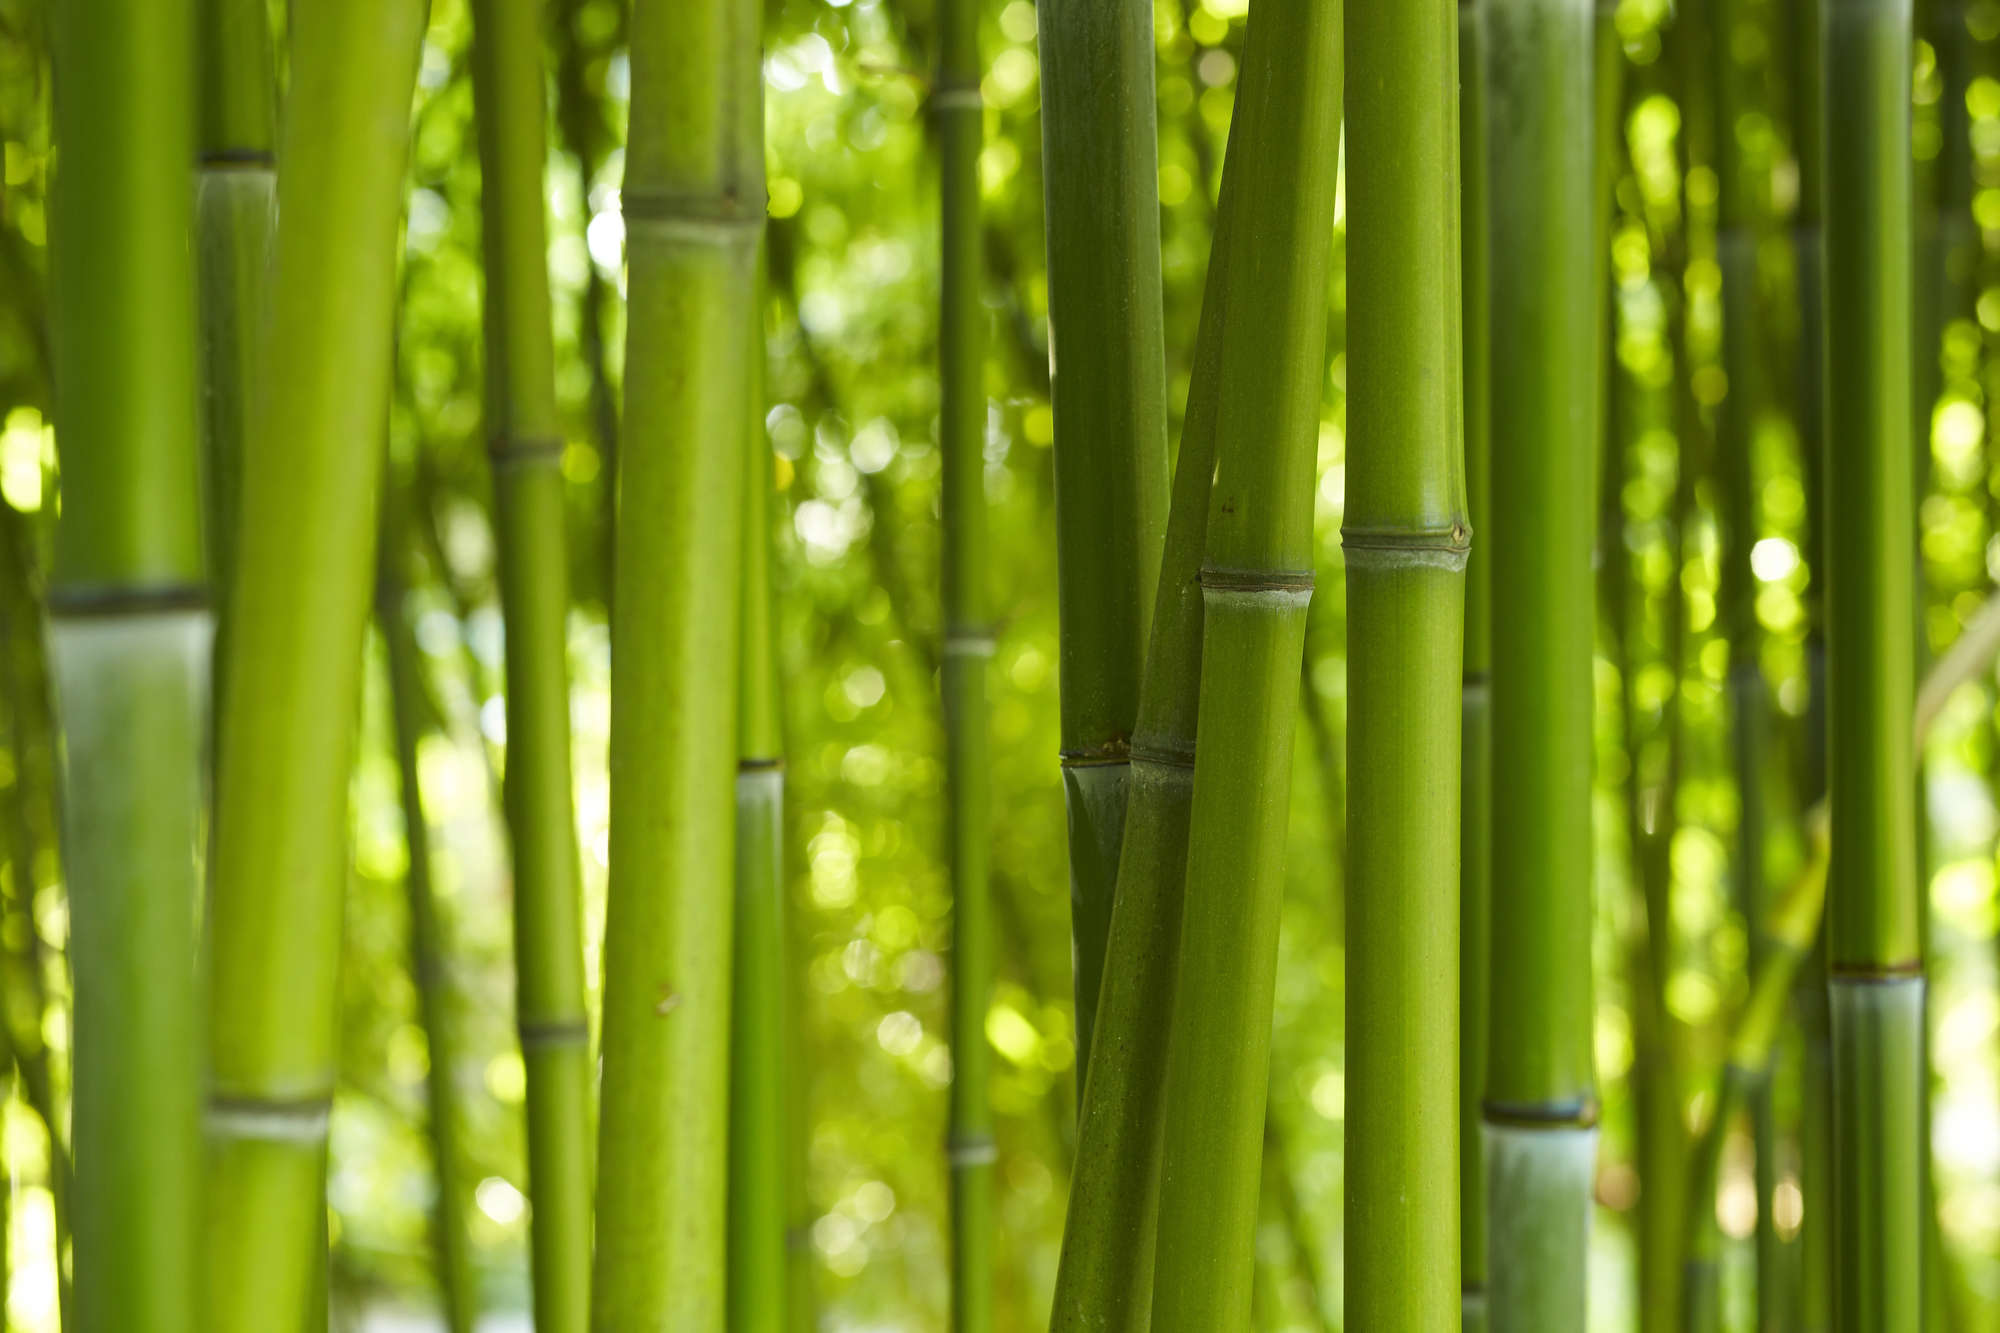             Natuurbehang bamboe close-up op parelmoer glad vlies
        